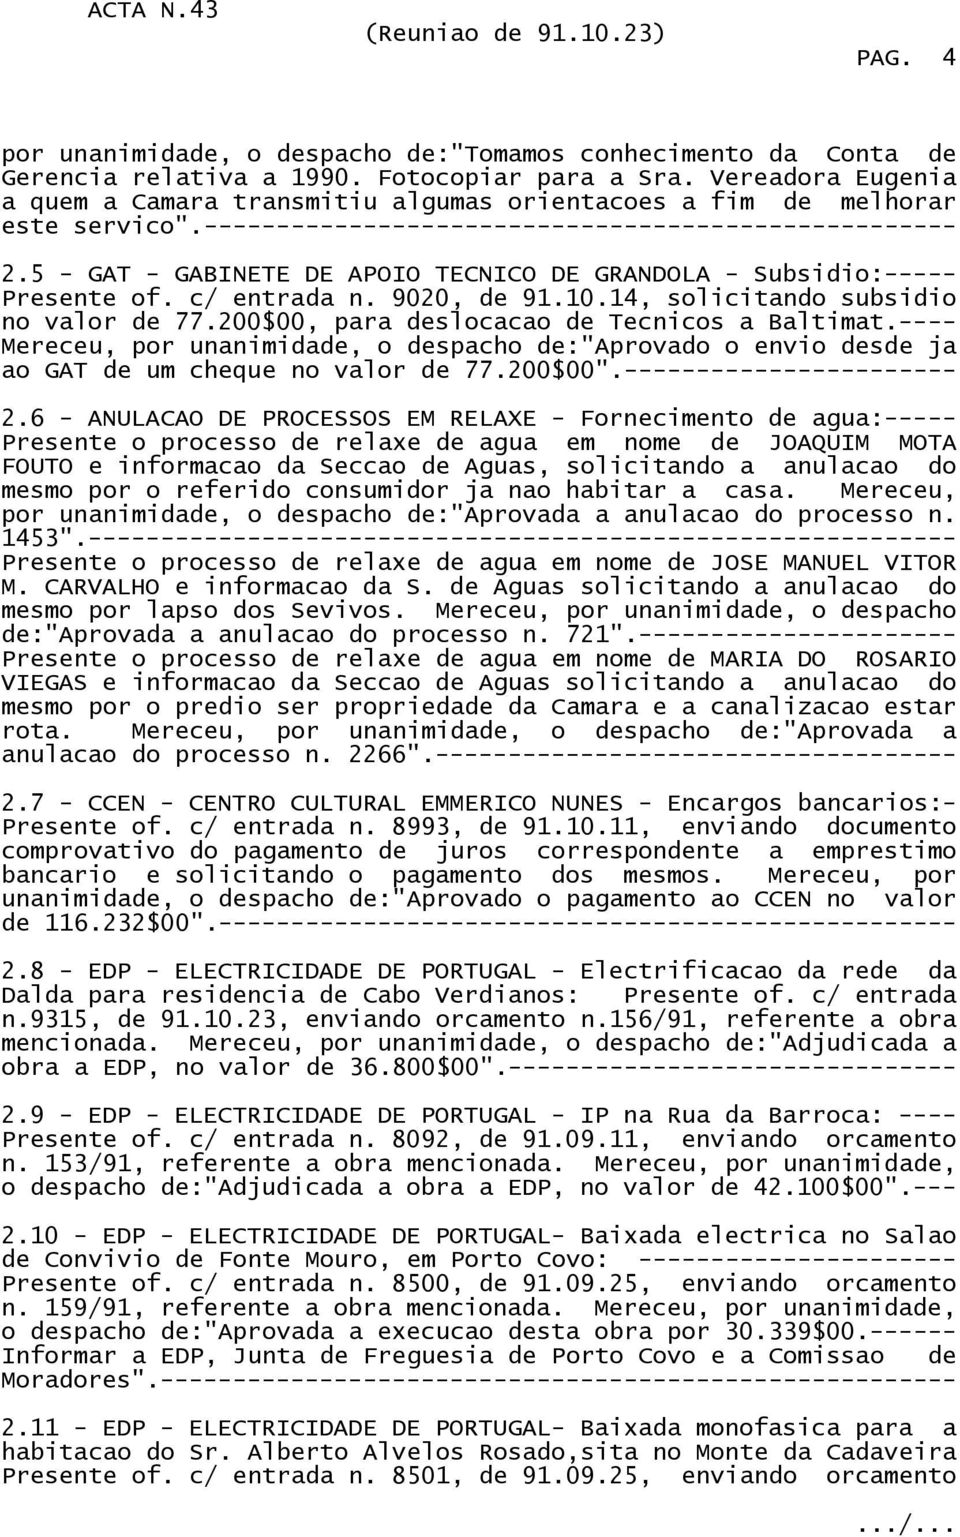 5 - GAT - GABINETE DE APOIO TECNICO DE GRANDOLA - Subsidio:----- Presente of. c/ entrada n. 9020, de 91.10.14, solicitando subsidio no valor de 77.200$00, para deslocacao de Tecnicos a Baltimat.